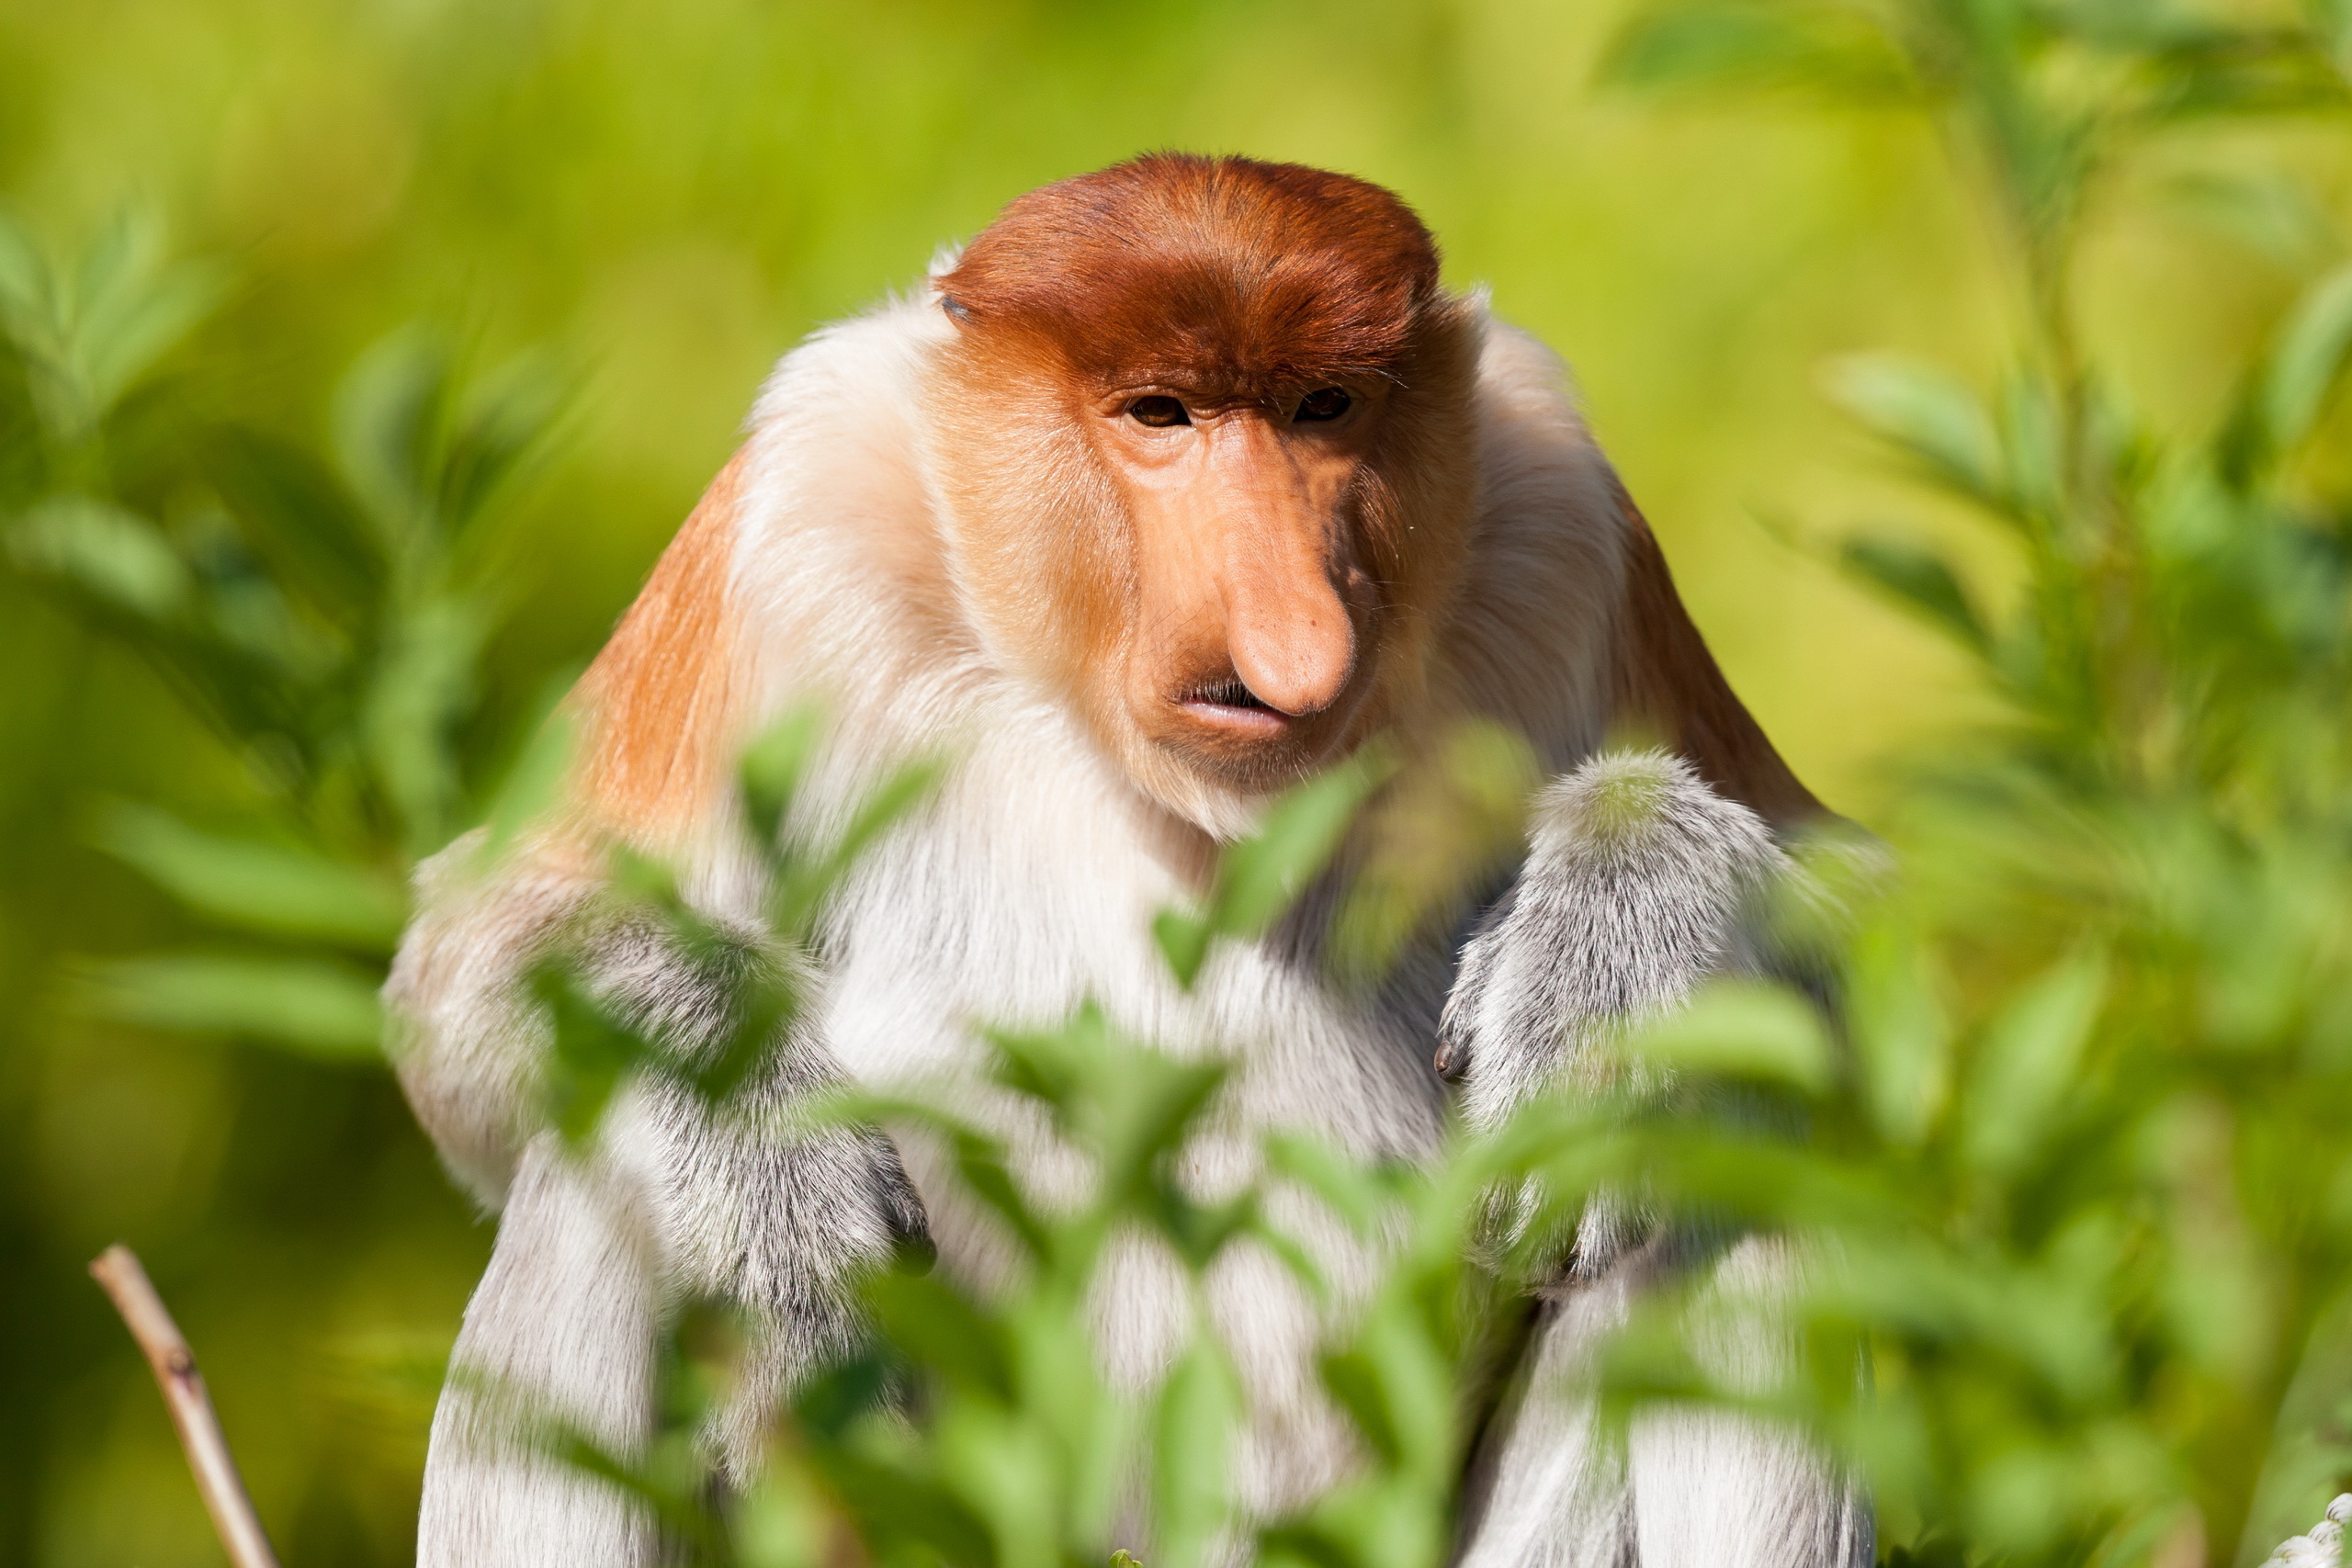 proboscis monkey, monkey, animal, primate, monkeys